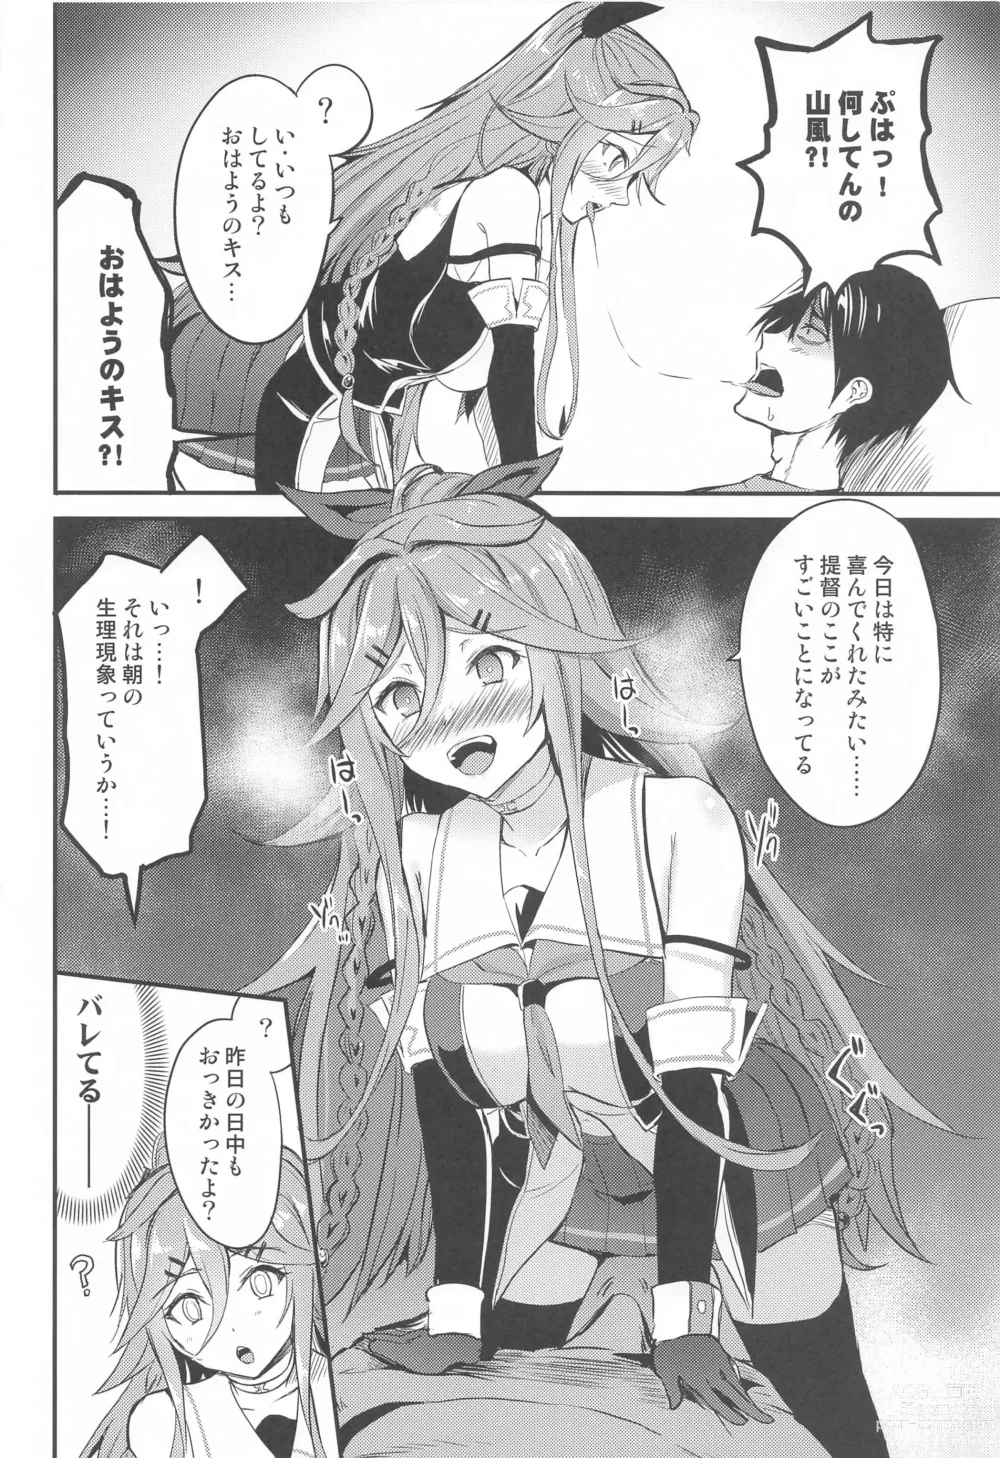 Page 7 of doujinshi Yamakaze to Nakayoku Naru made